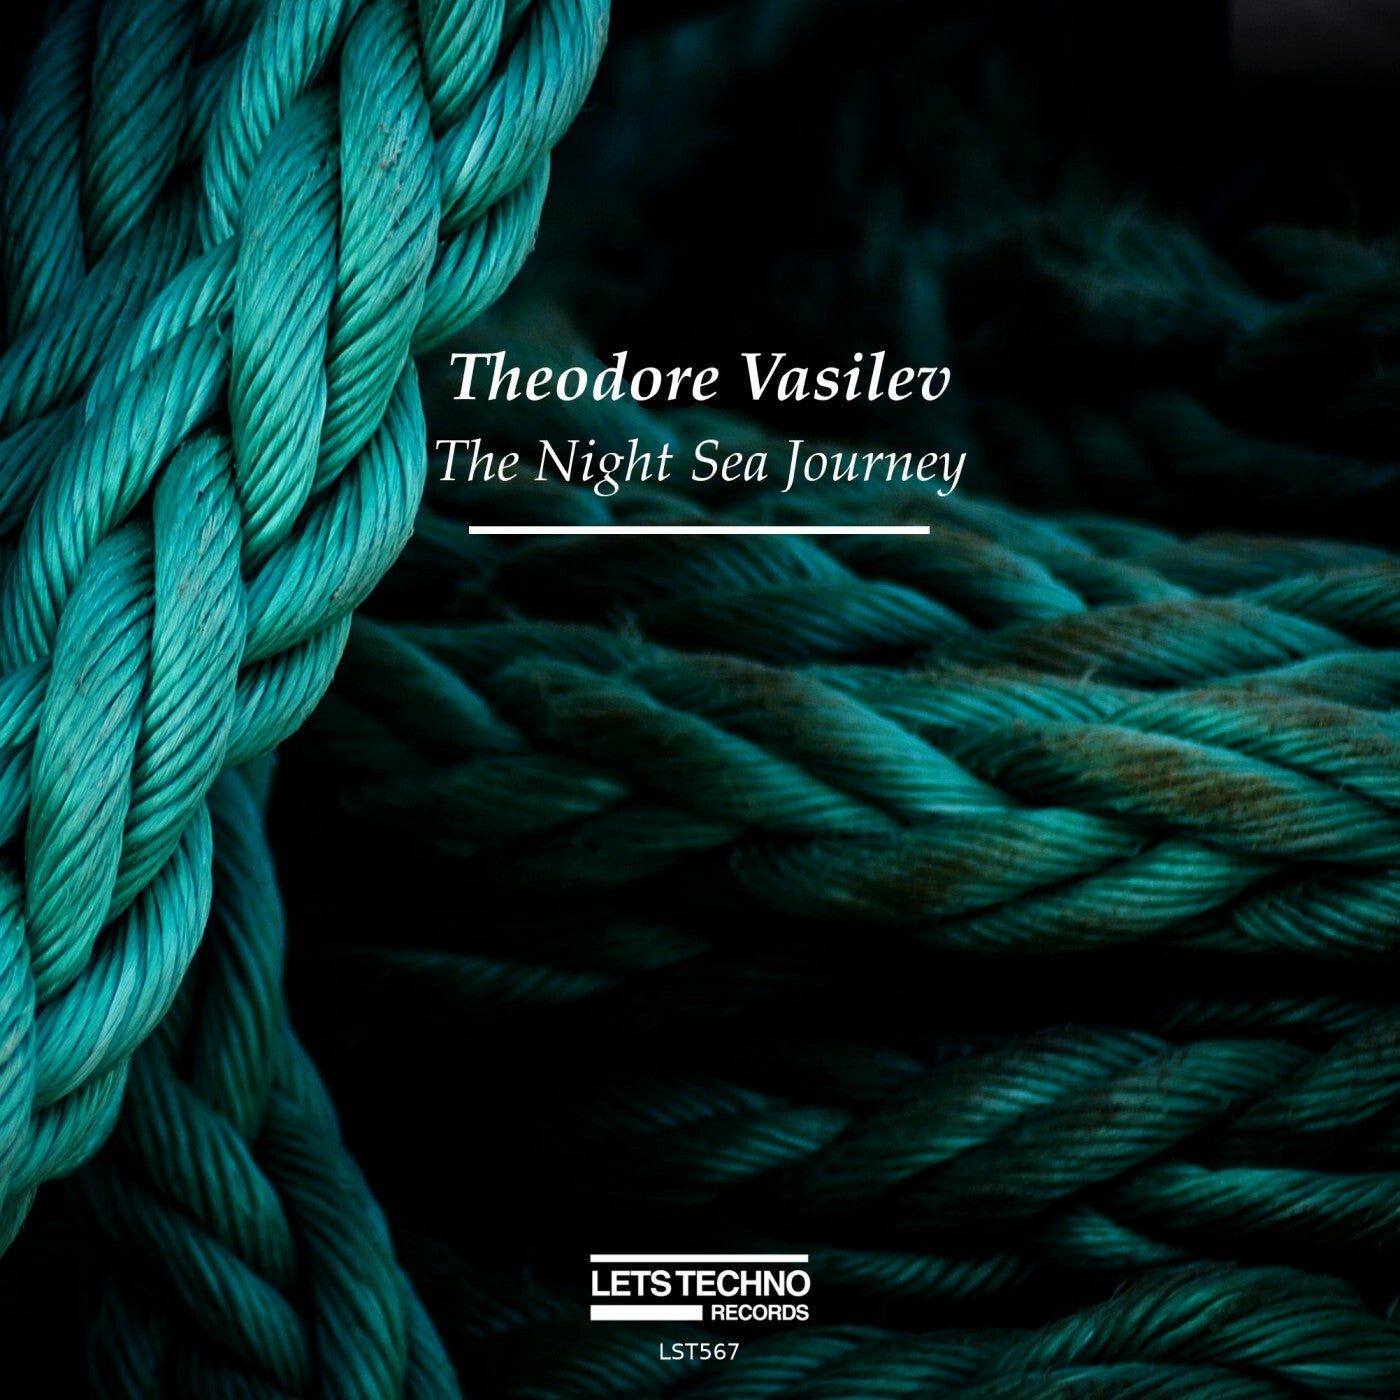 The Night Sea Journey